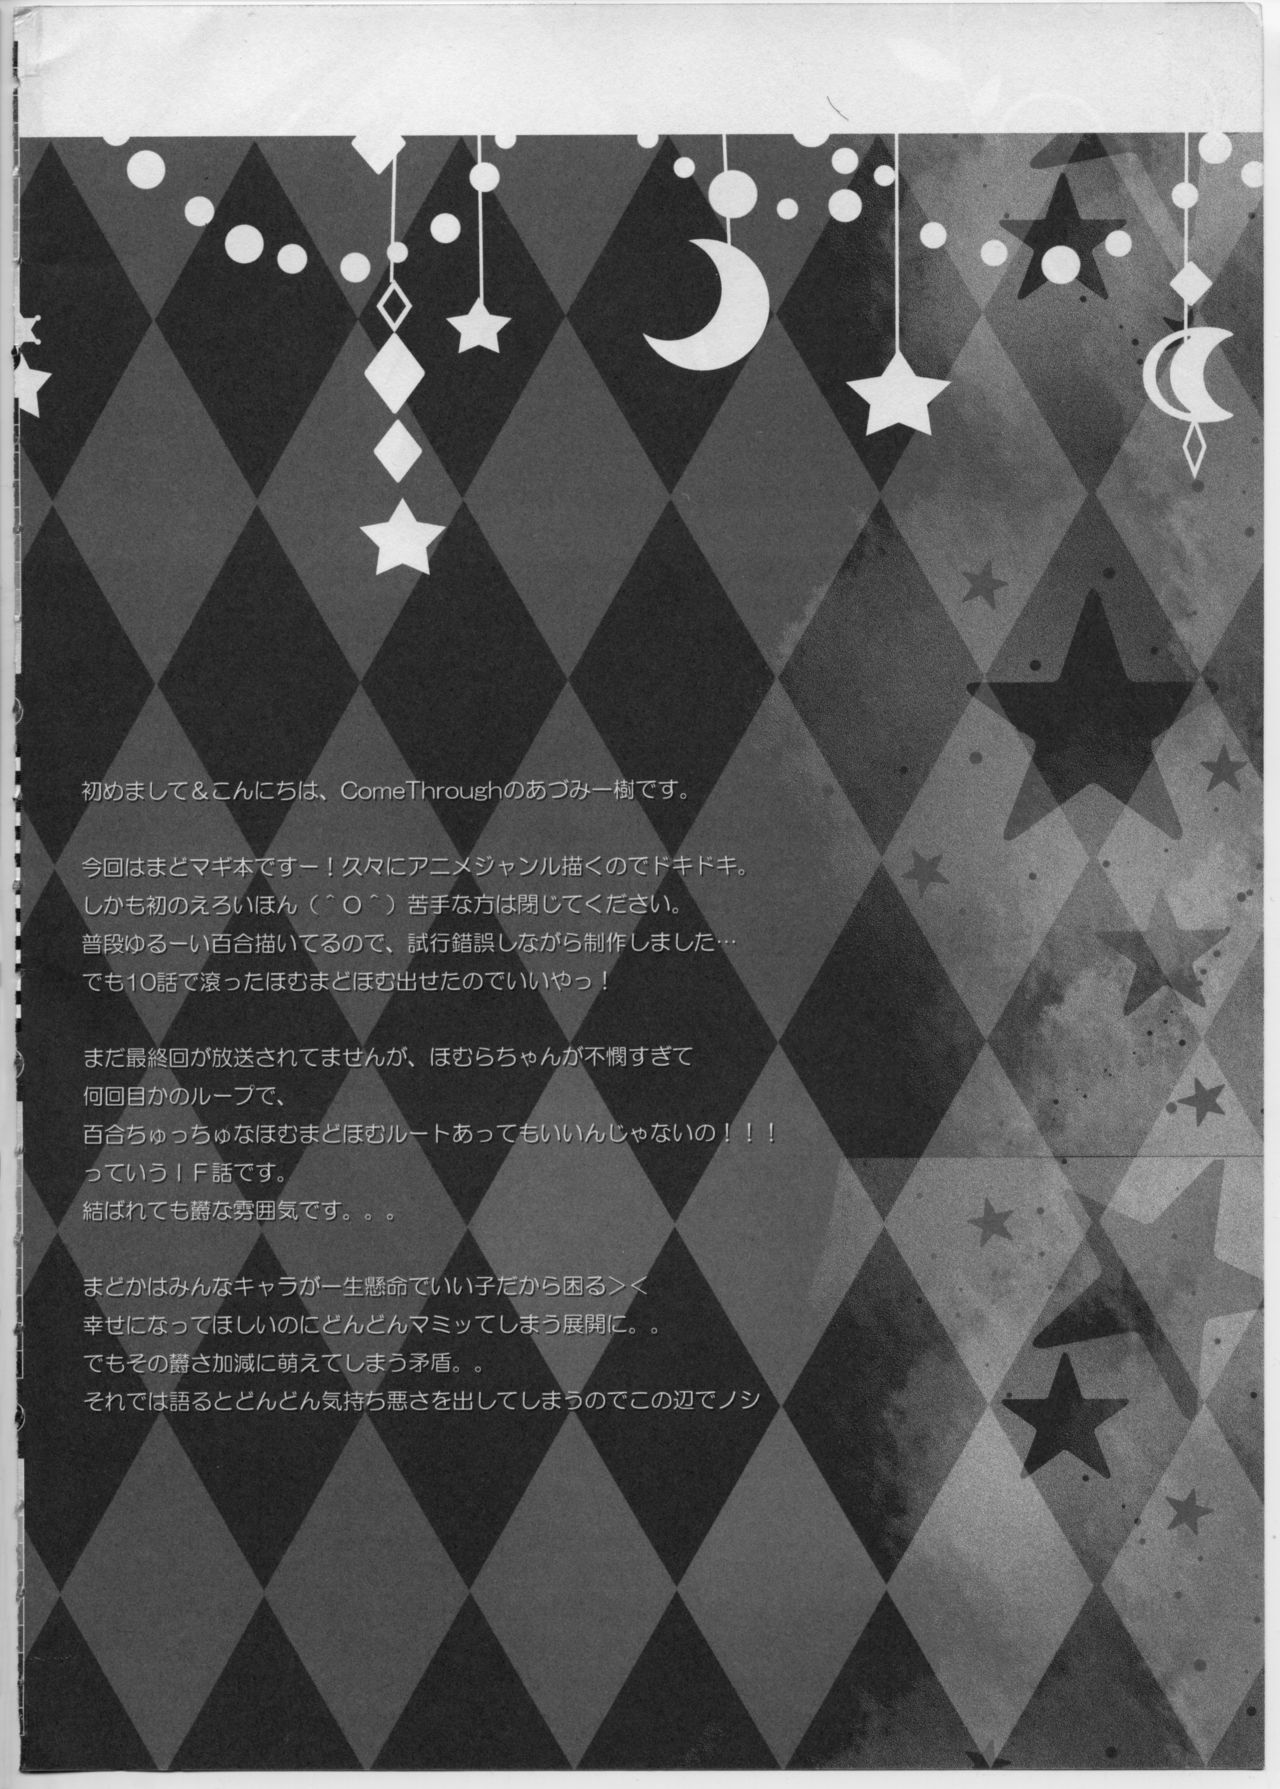 (Mou Nanimo Kowakunai) [Come Through (Adumi Kazuki)] Witch Dream (Puella Magi Madoka Magica) (もう何も恐くない) [Come Through (あづみ一樹)] Witch Dream (魔法少女まどか☆マギカ)